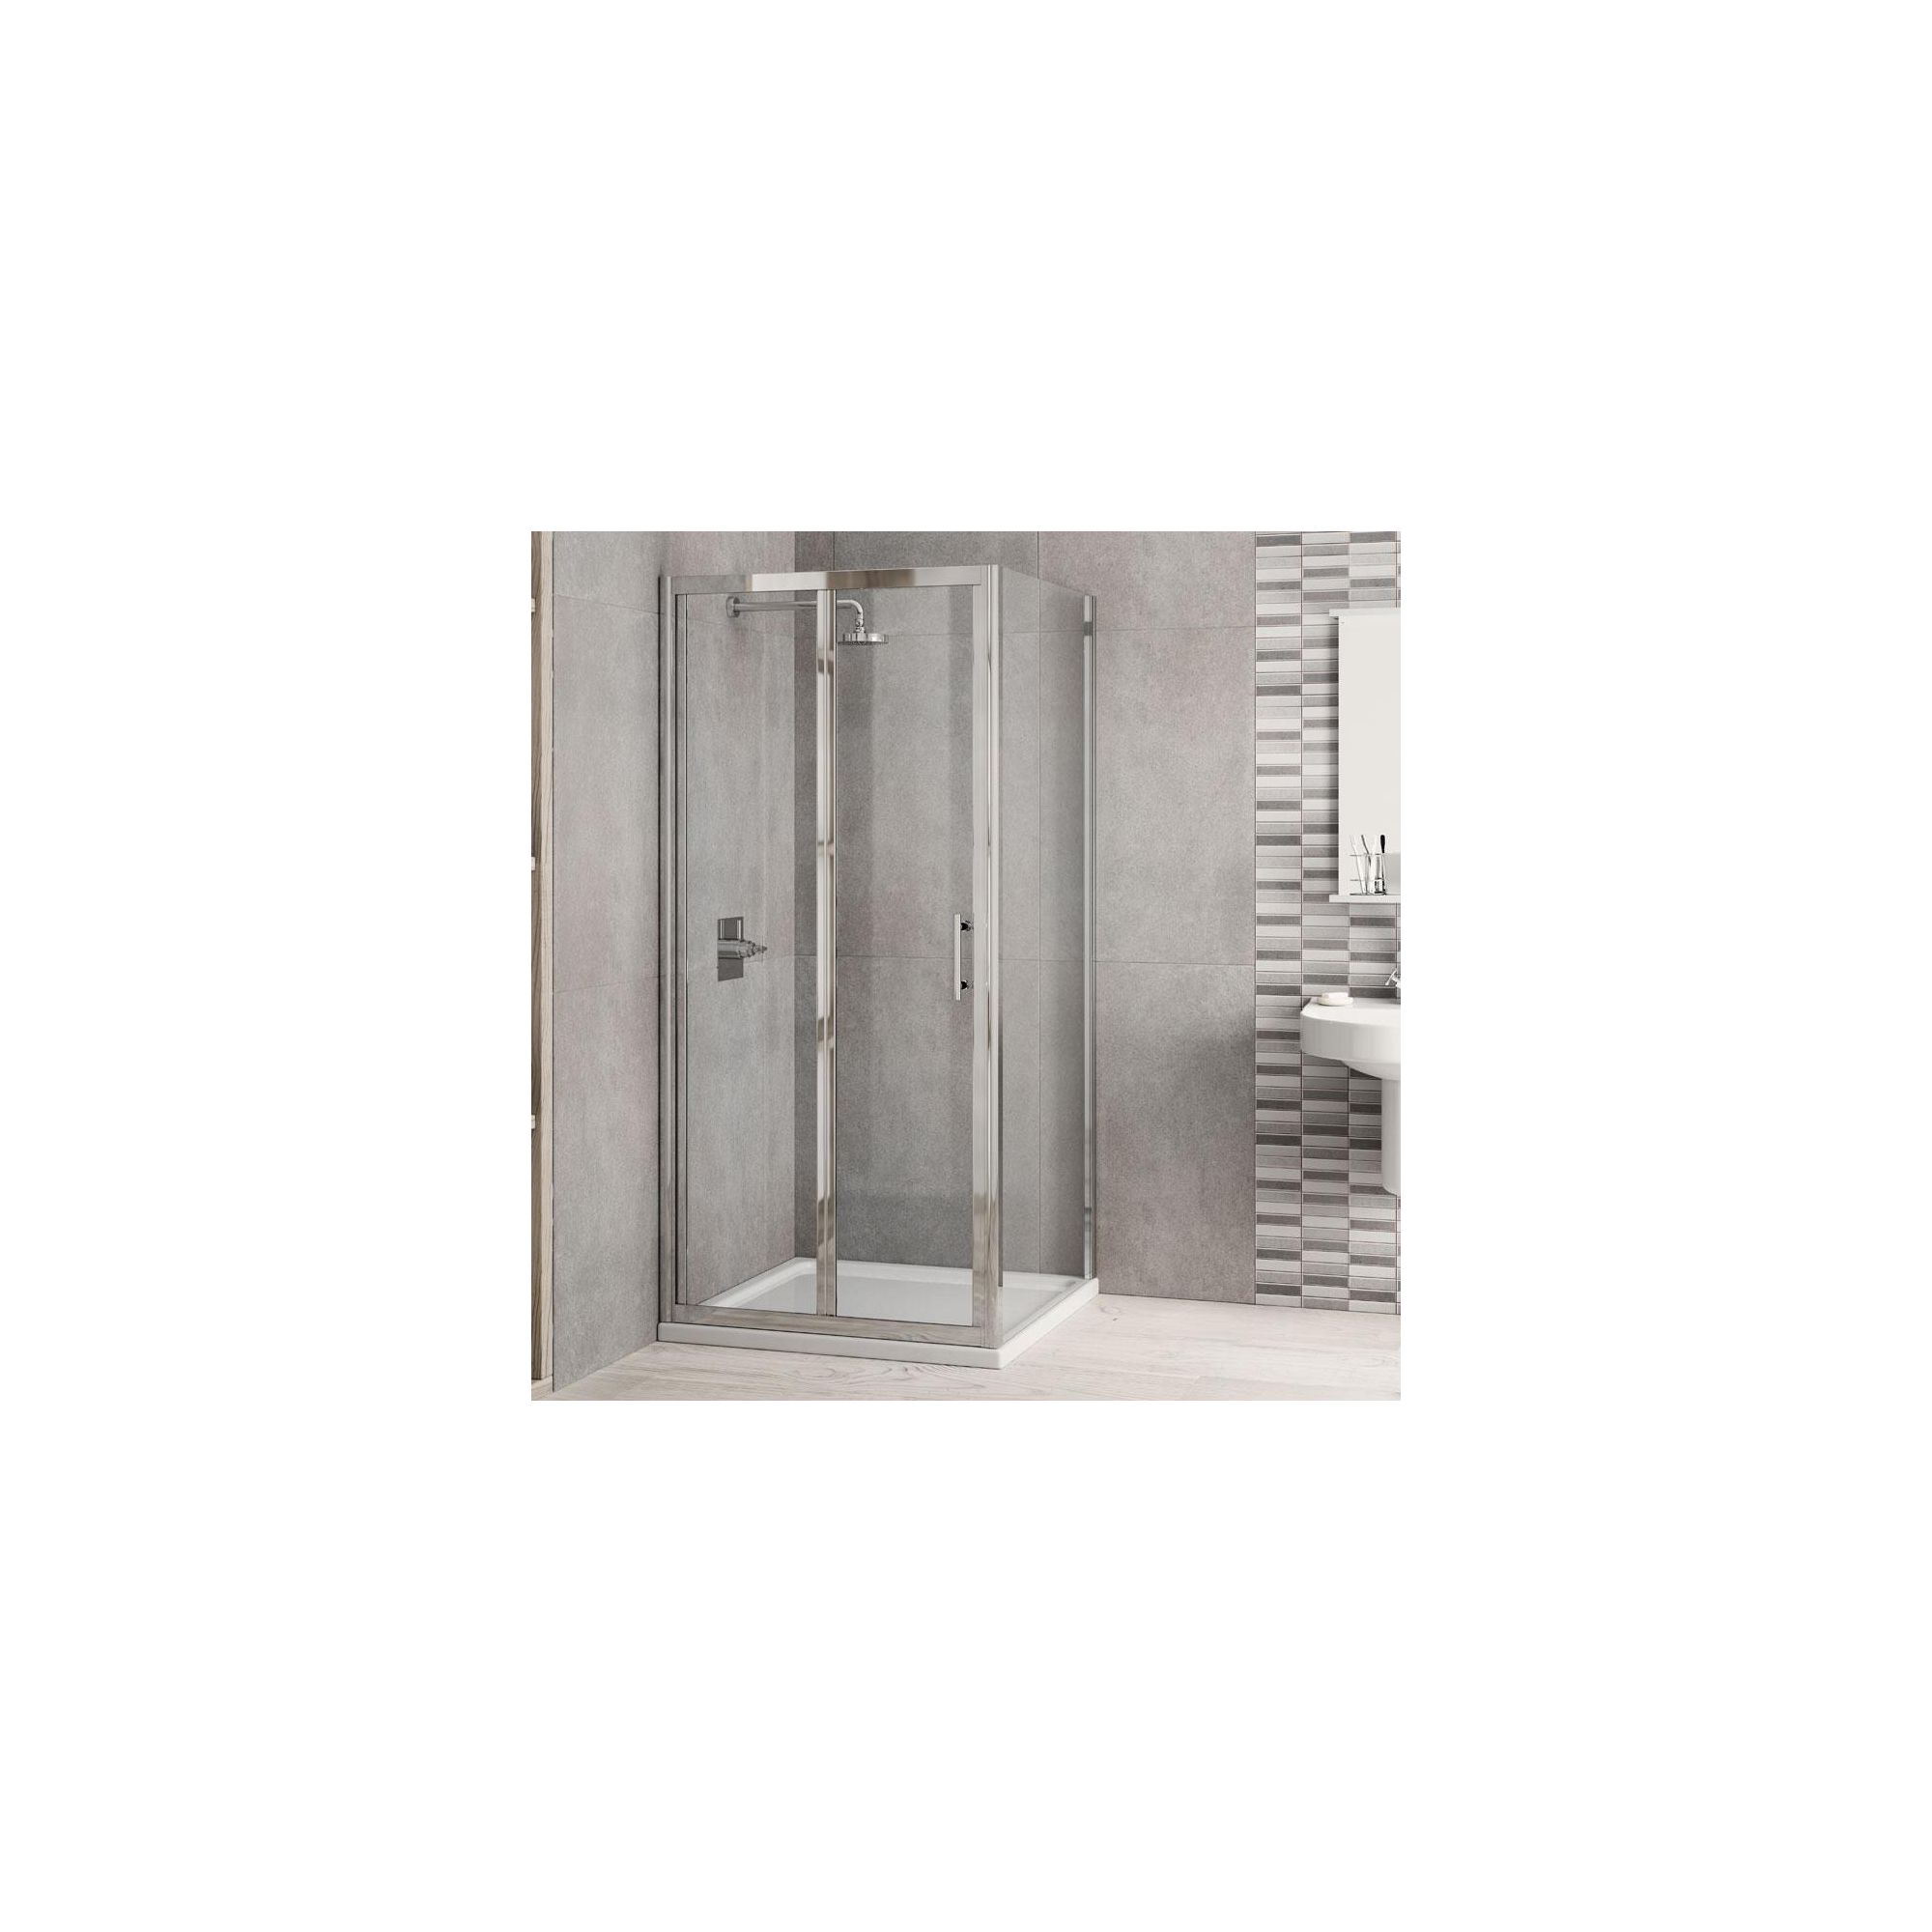 Elemis Inspire Bi-Fold Door Shower Enclosure, 800mm x 800mm, 6mm Glass, Low Profile Tray at Tesco Direct